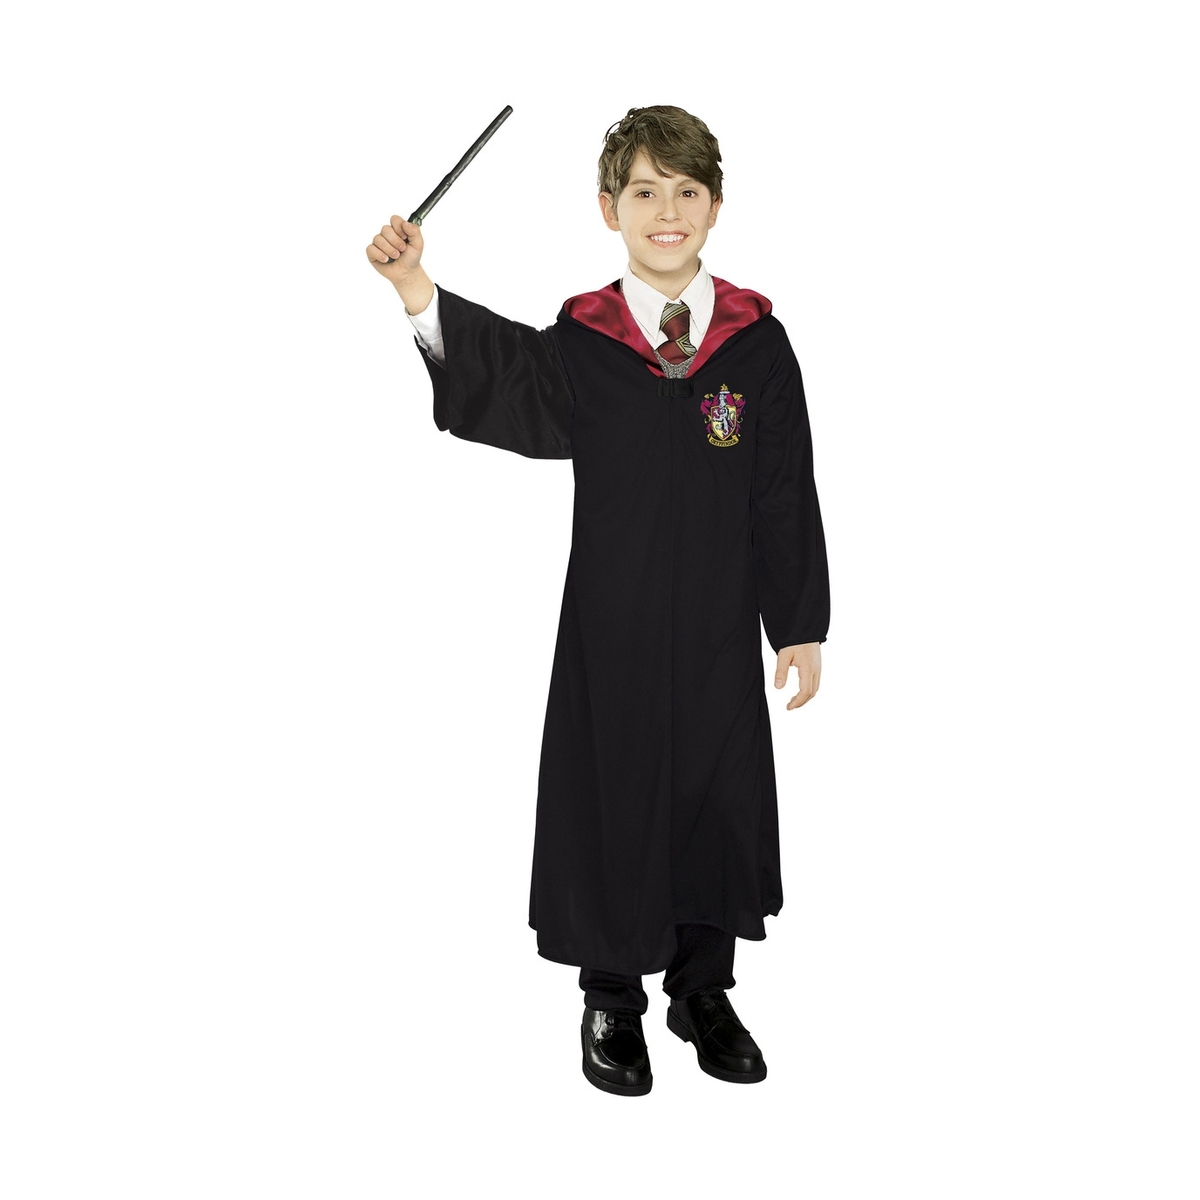 Harry Potter Costume - Age 9 | Kmart